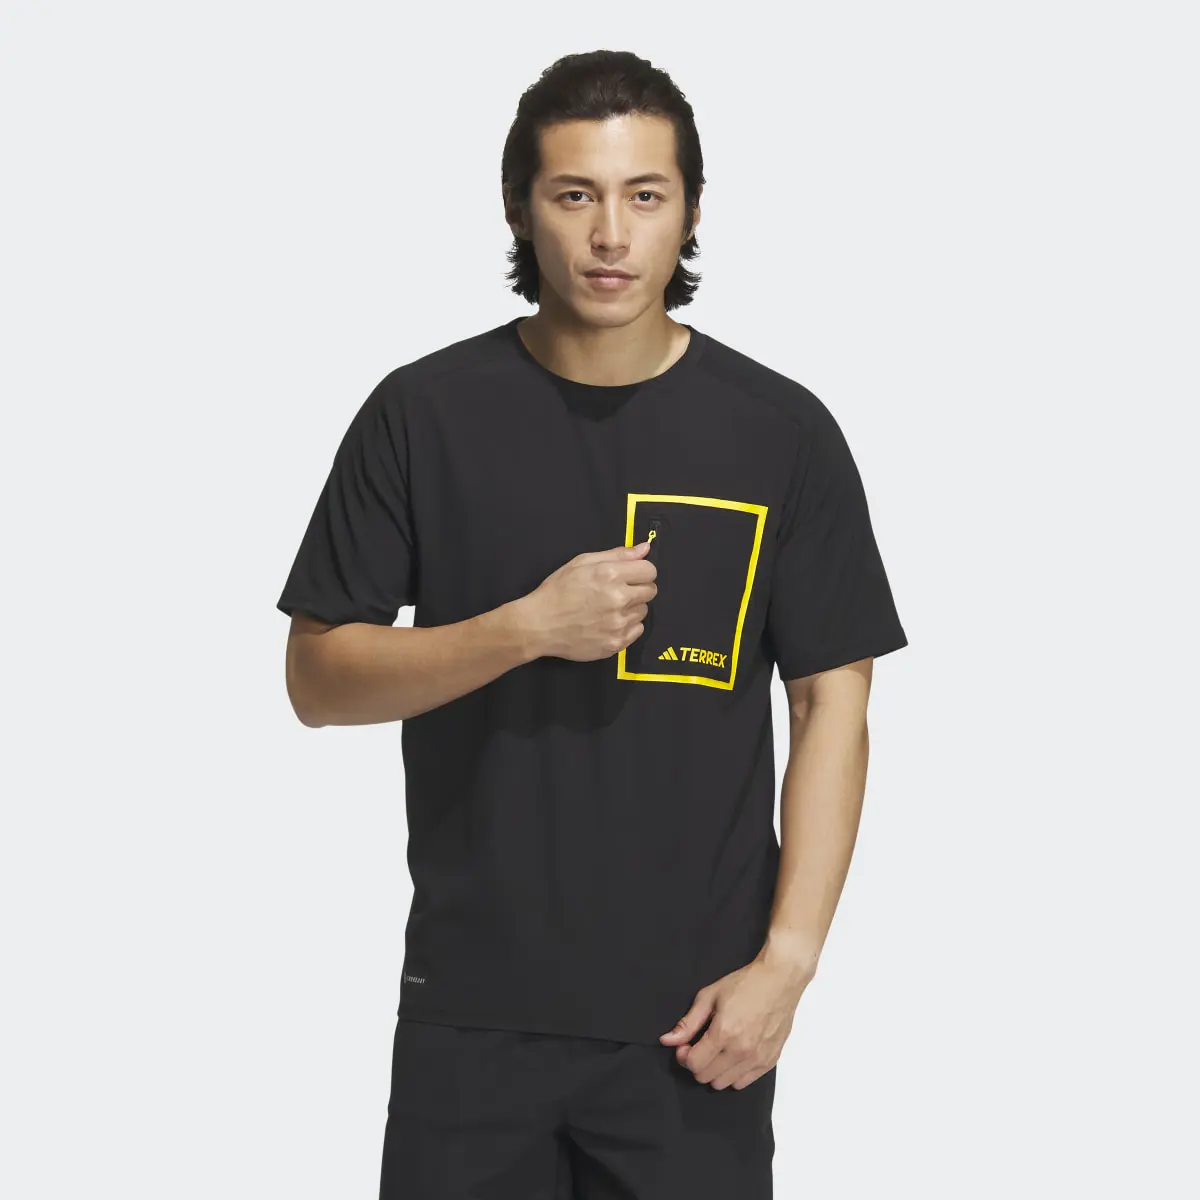 Adidas T-shirt National Geographic. 2